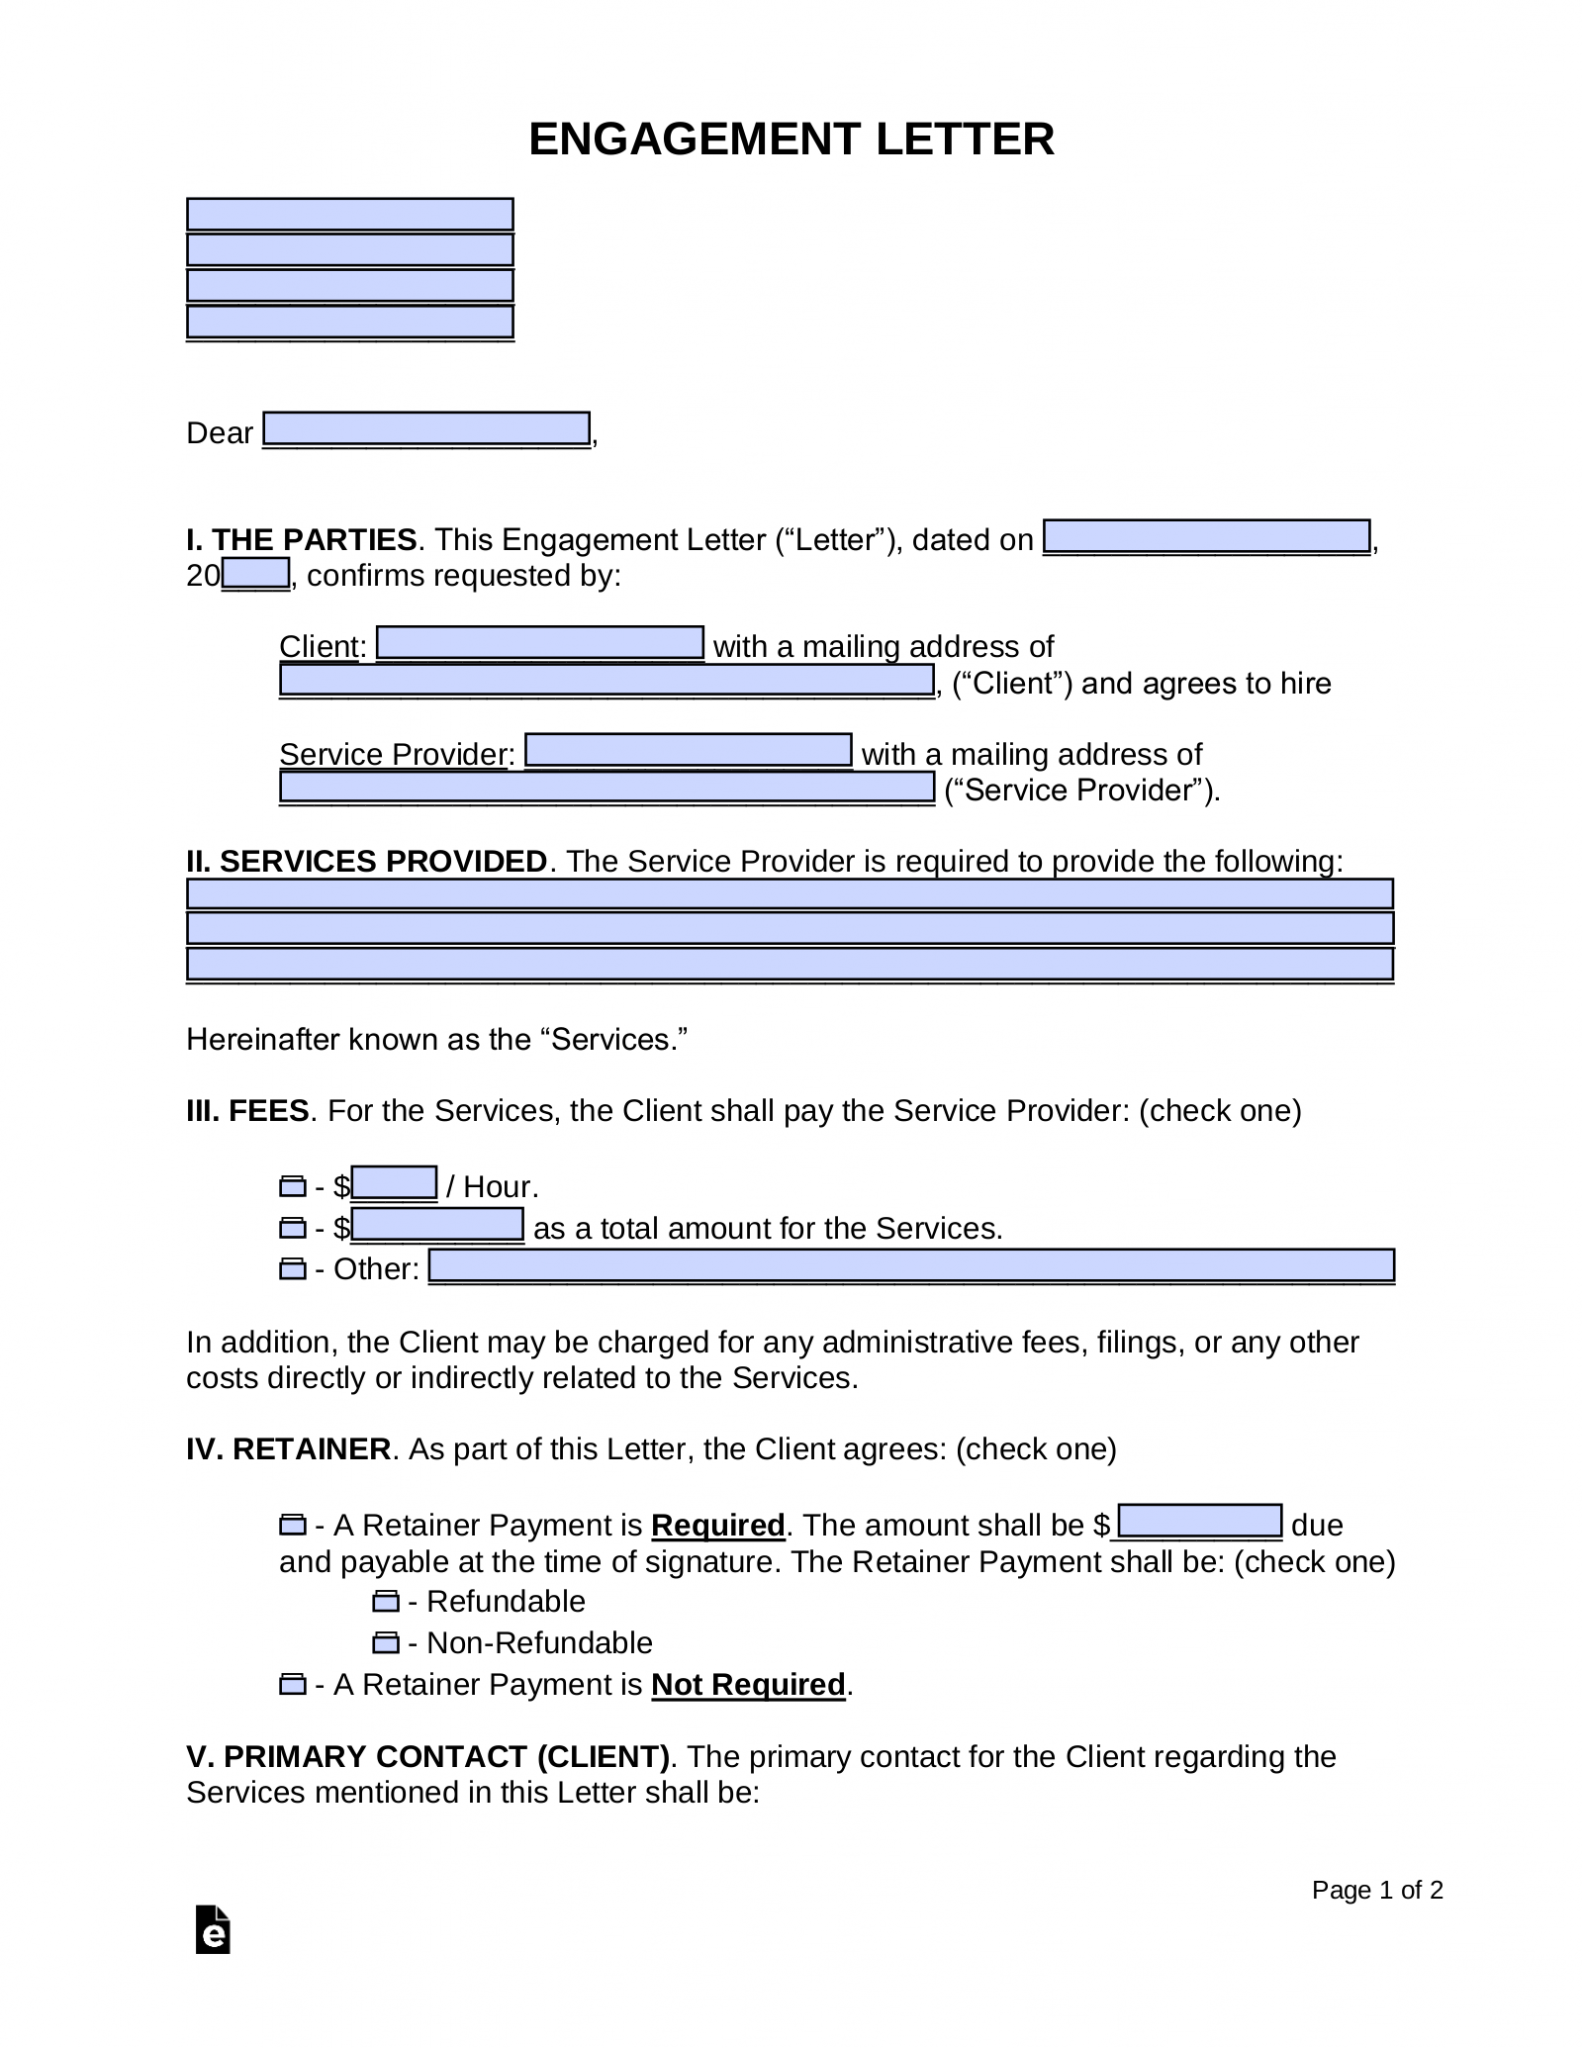 free-engagement-letter-templates-3-sample-pdf-word-eforms